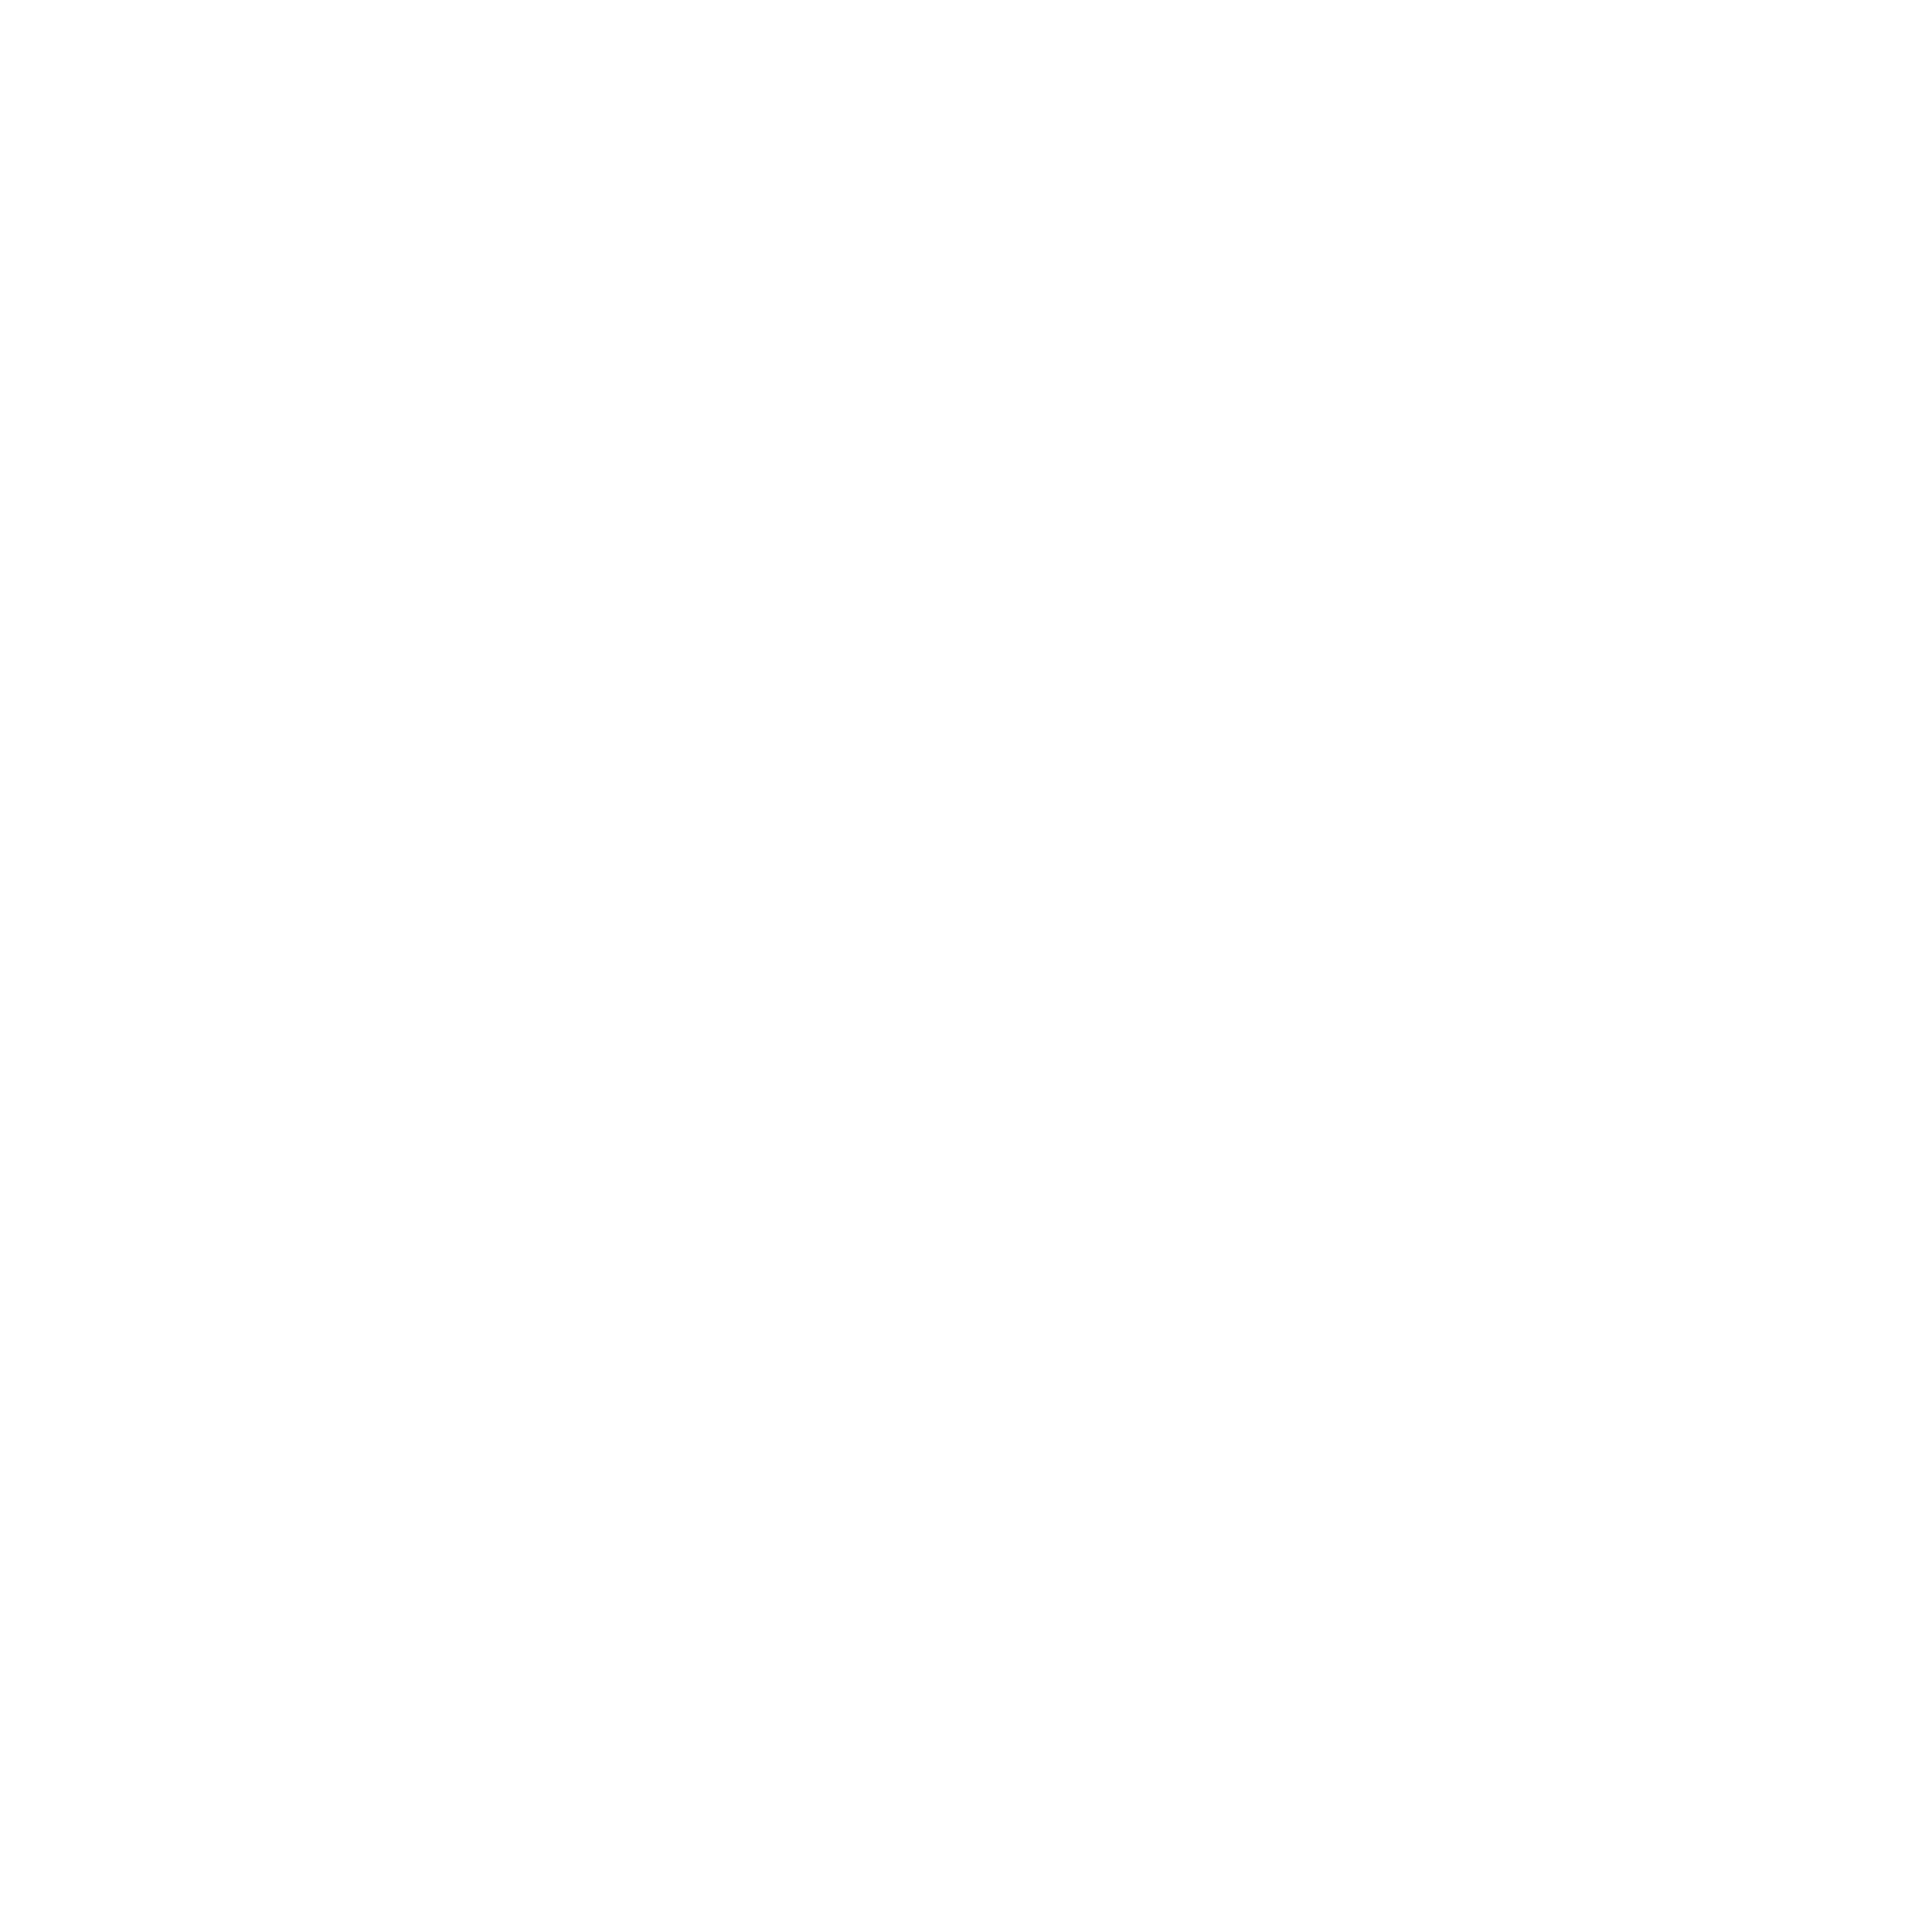 International Paper Logo - International Paper Logo PNG Transparent & SVG Vector - Freebie Supply